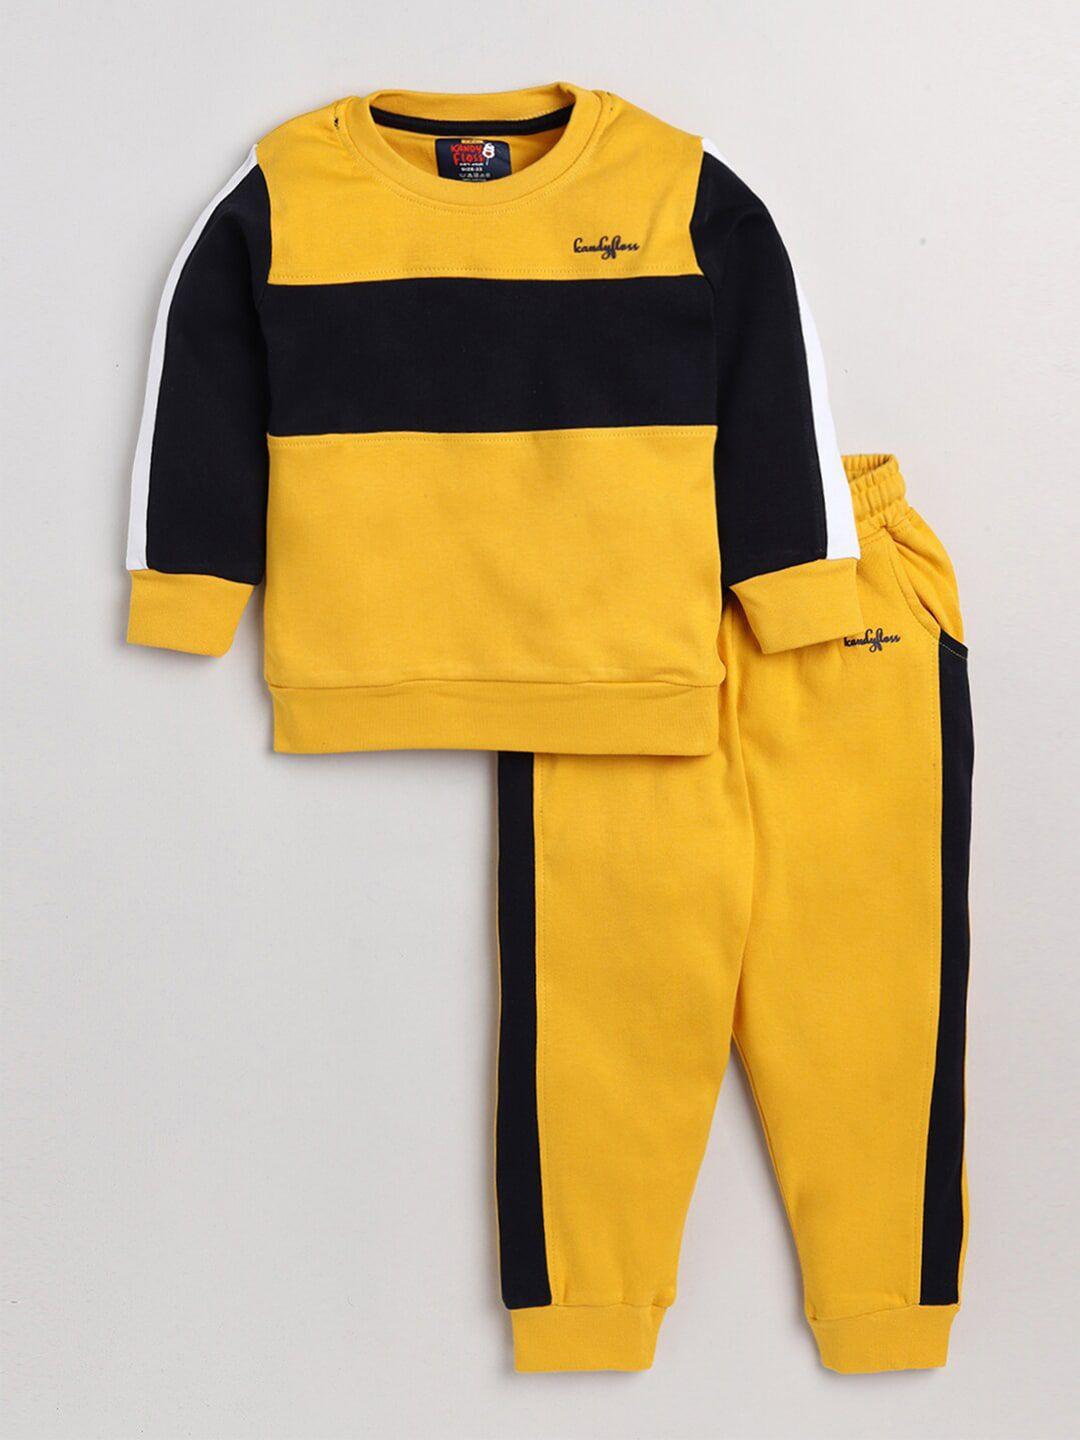 amul-kandyfloss-unisex-kids-yellow-&-black-colourblocked-cotton-top-with-pyjamas